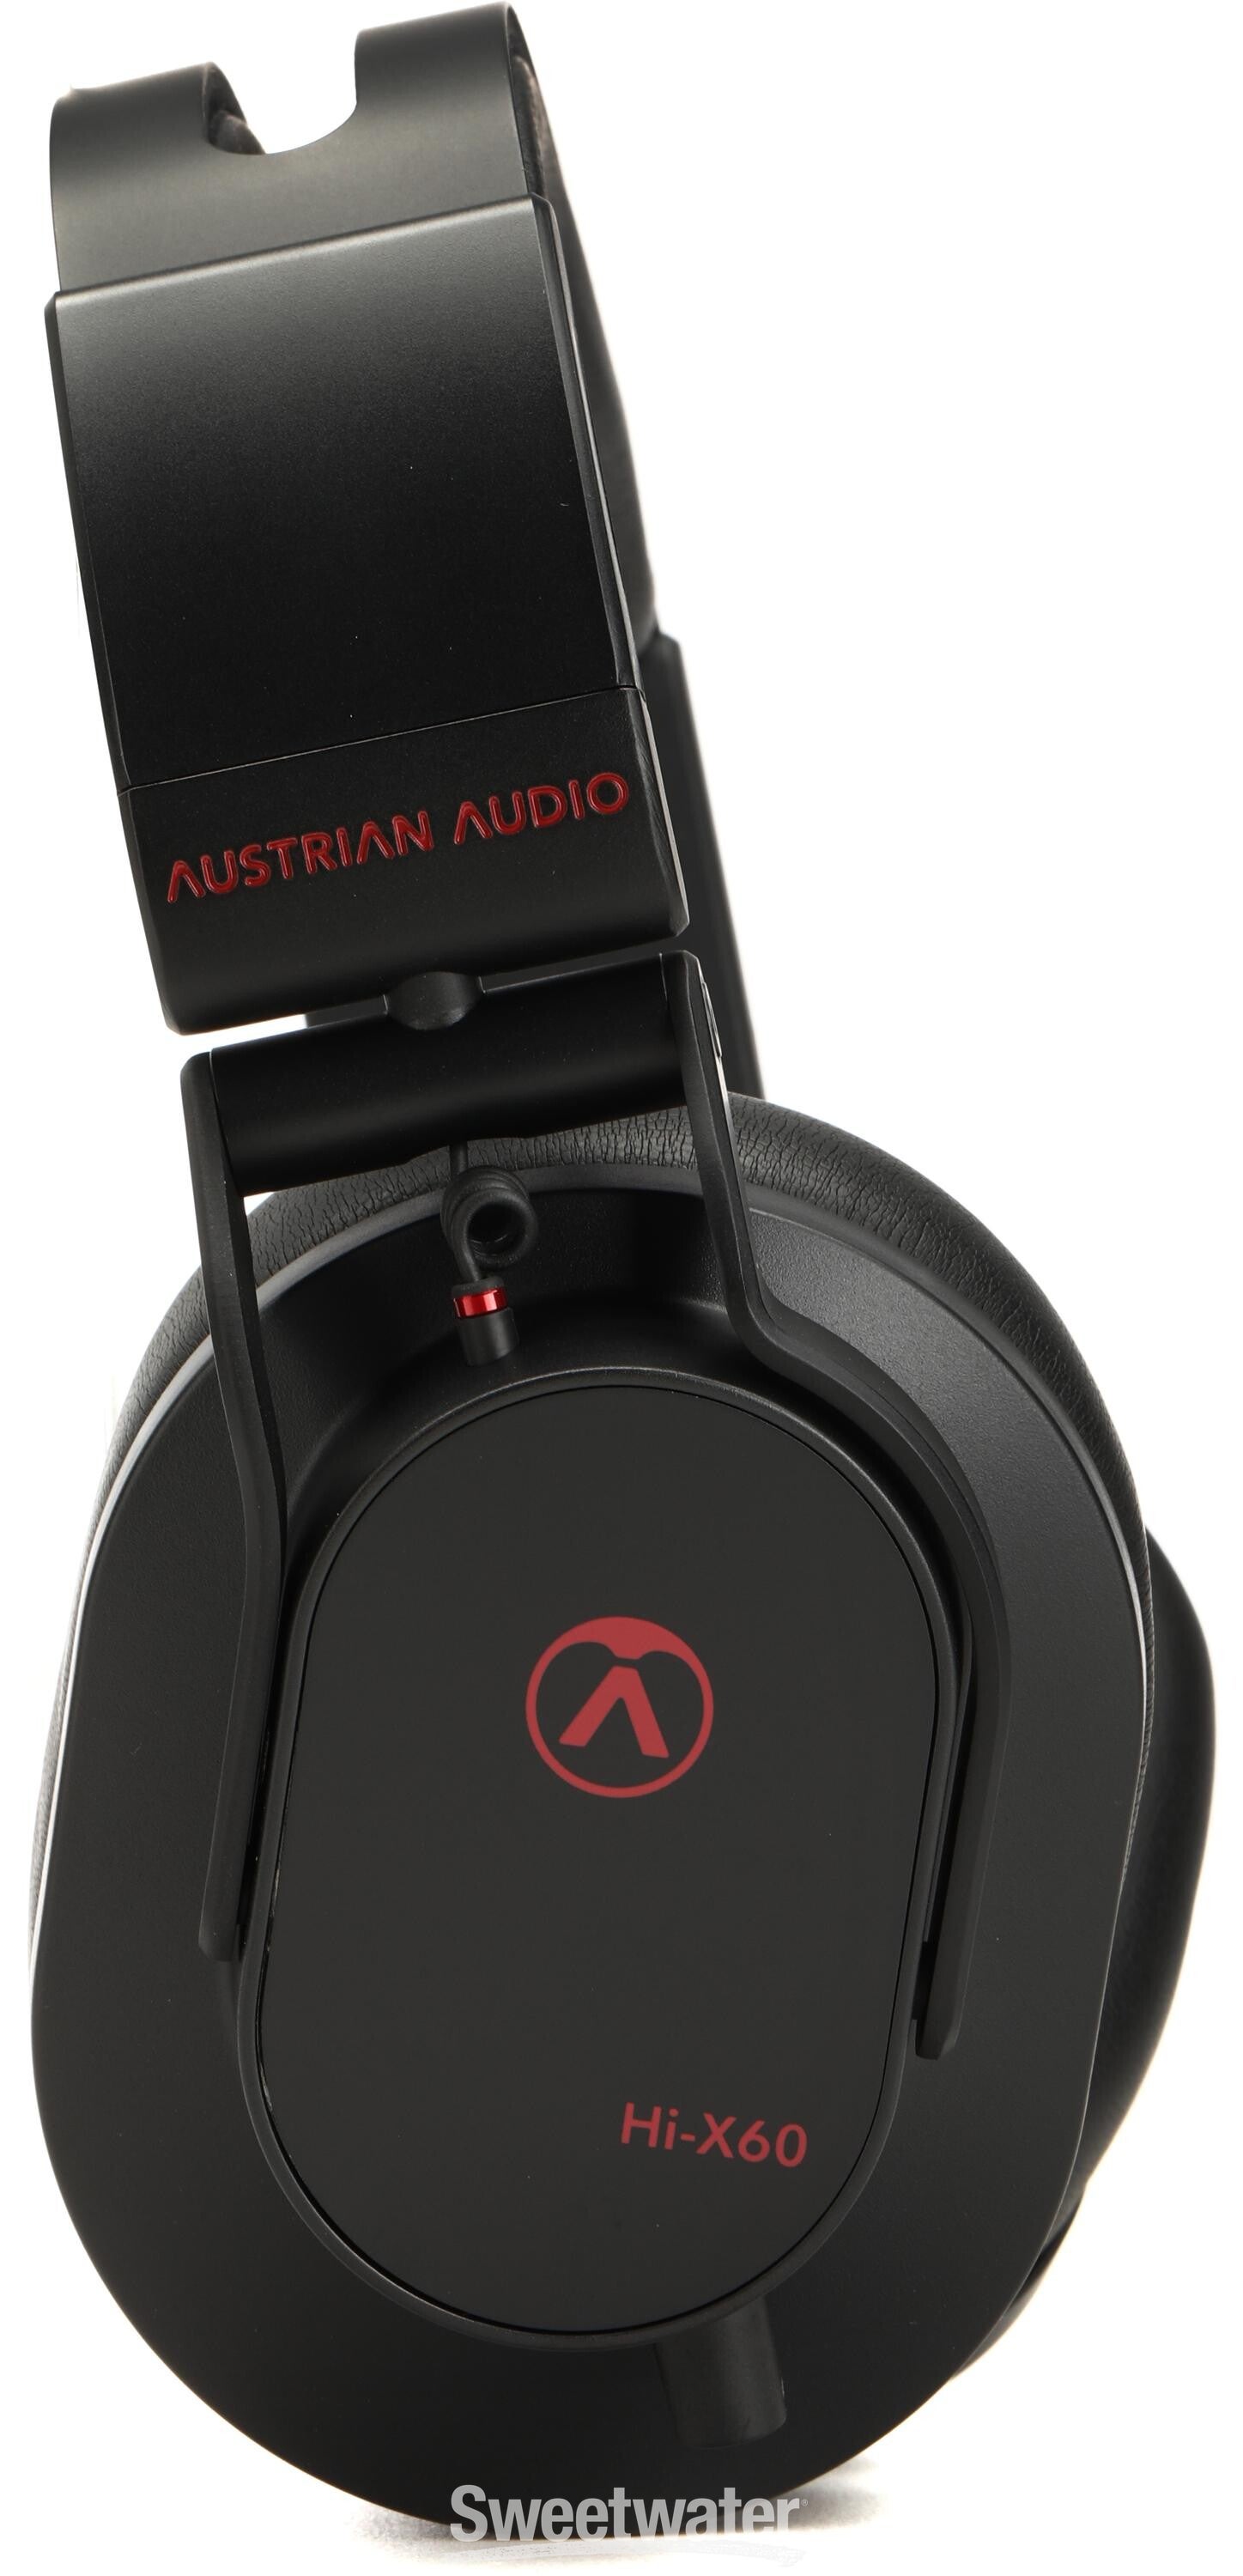 Austrian Audio Hi-X60 Professional Closed-back Over-ear Headphones